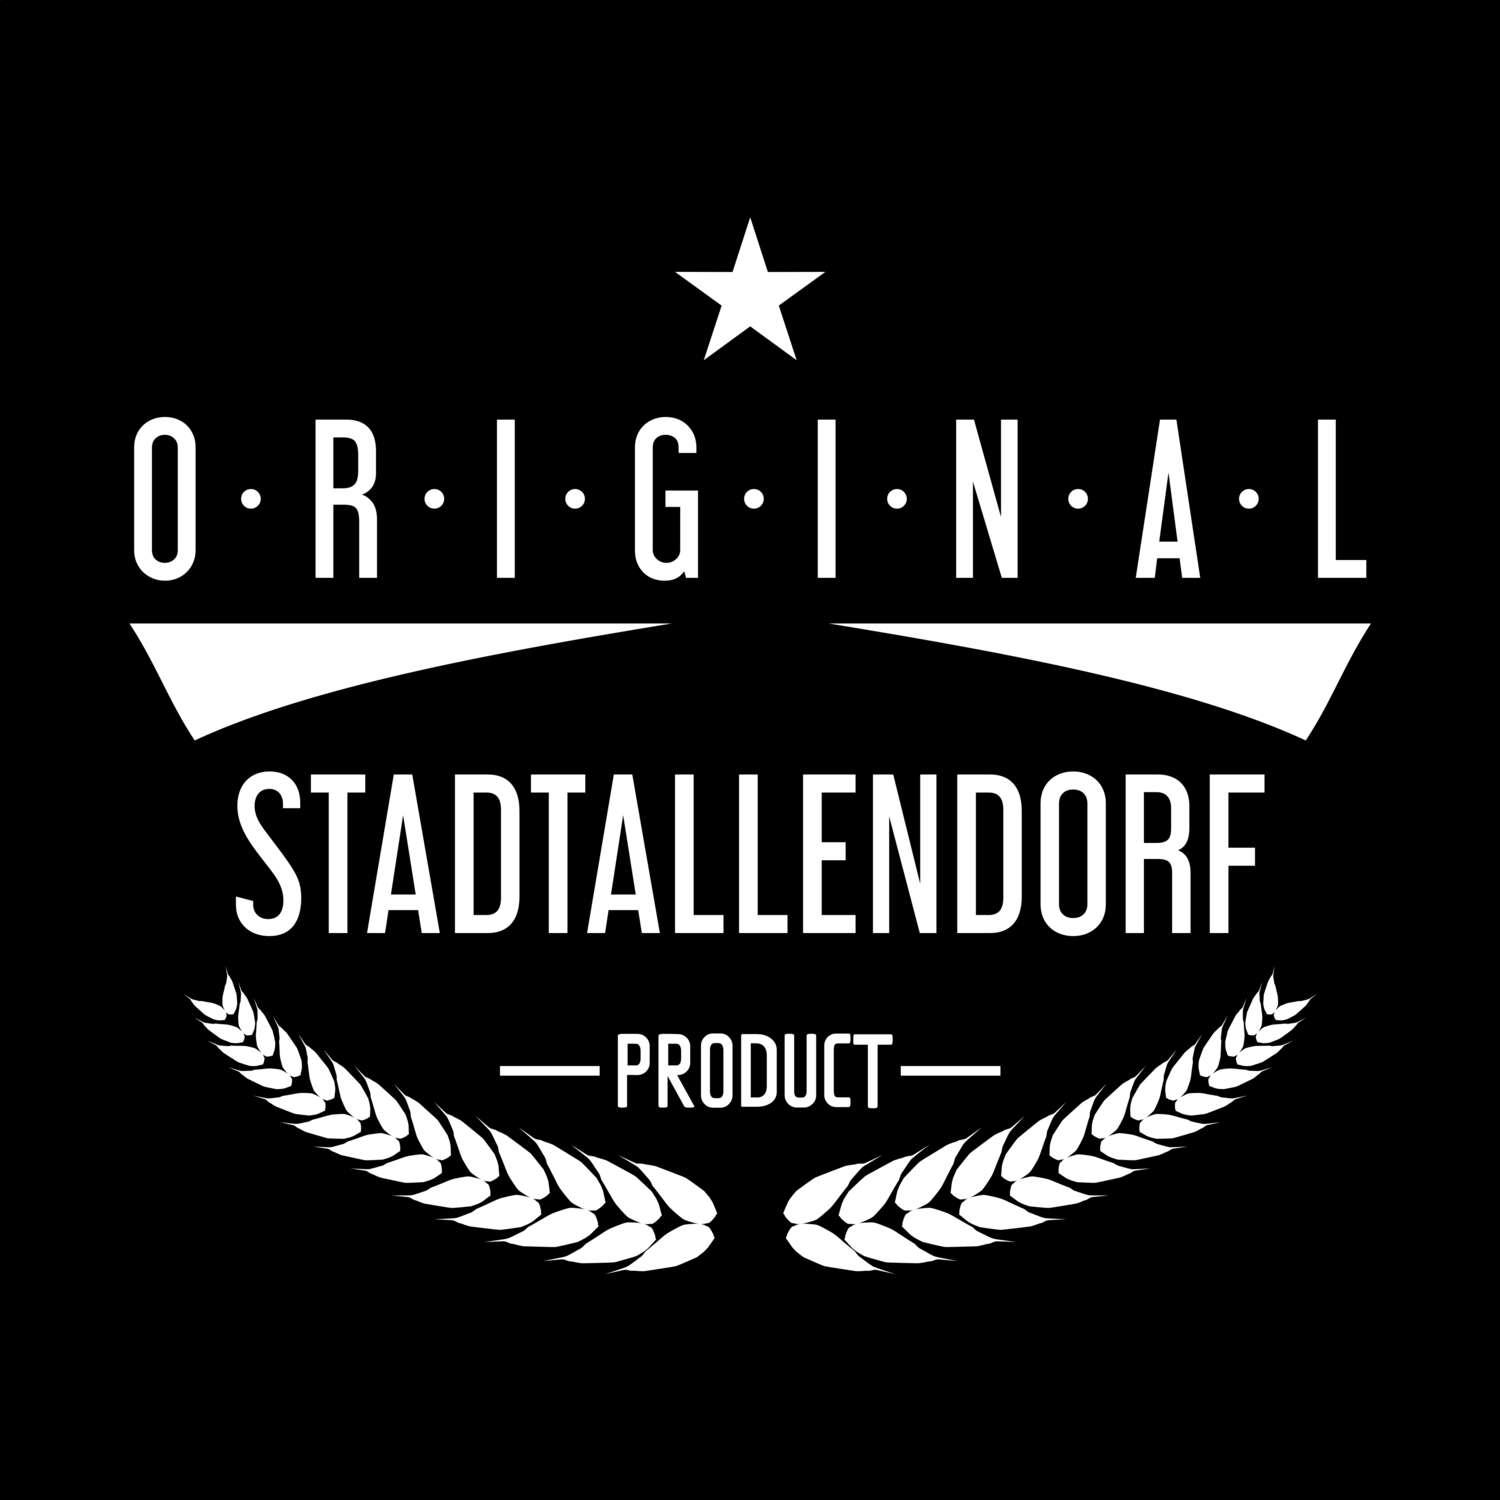 Stadtallendorf T-Shirt »Original Product«